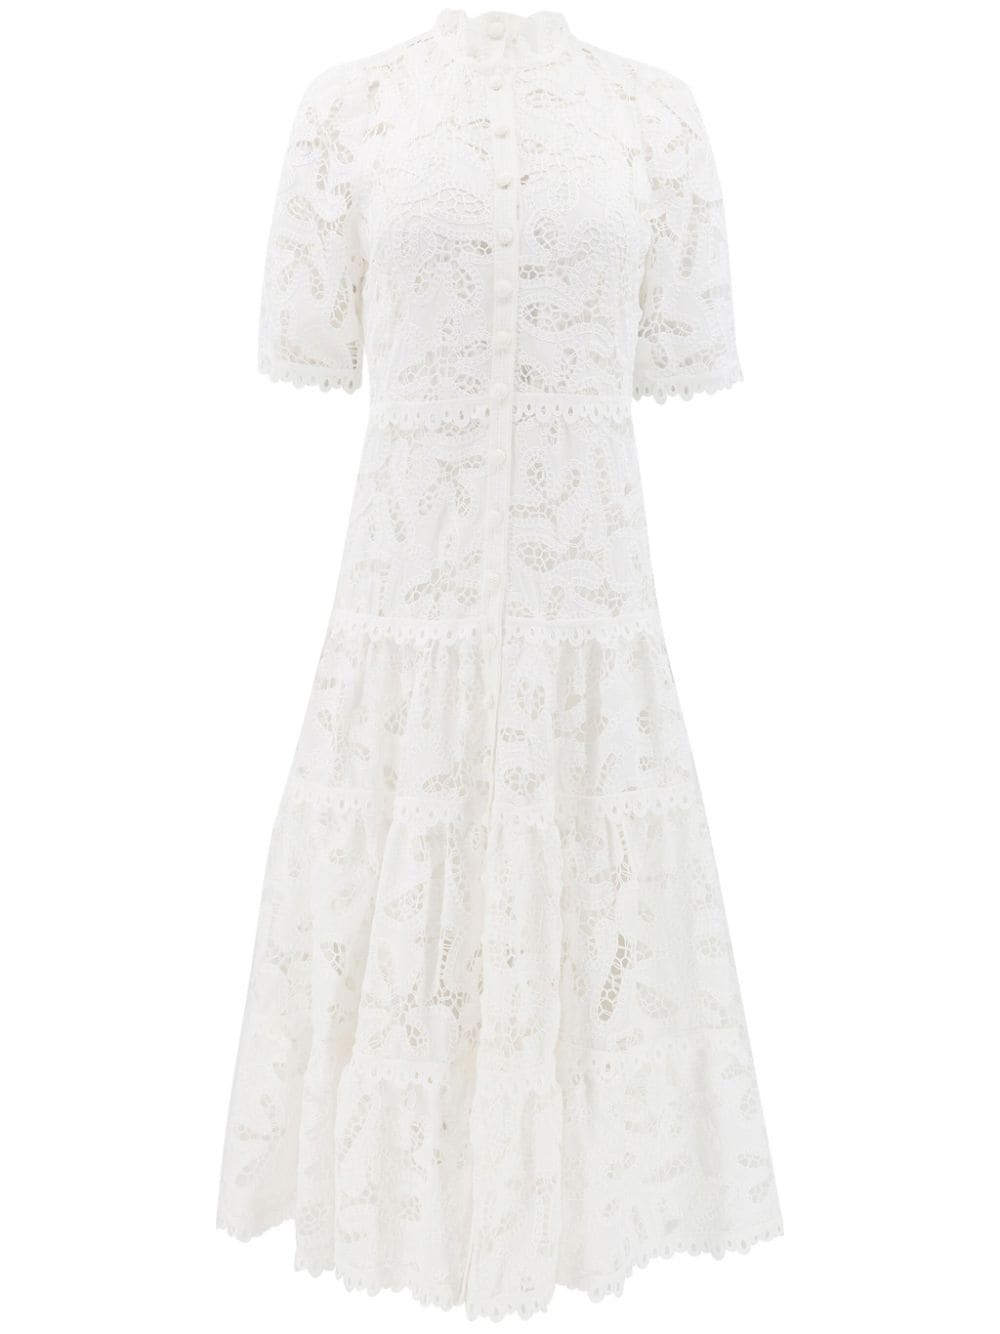 Ledina embroidered cotton shirt dress